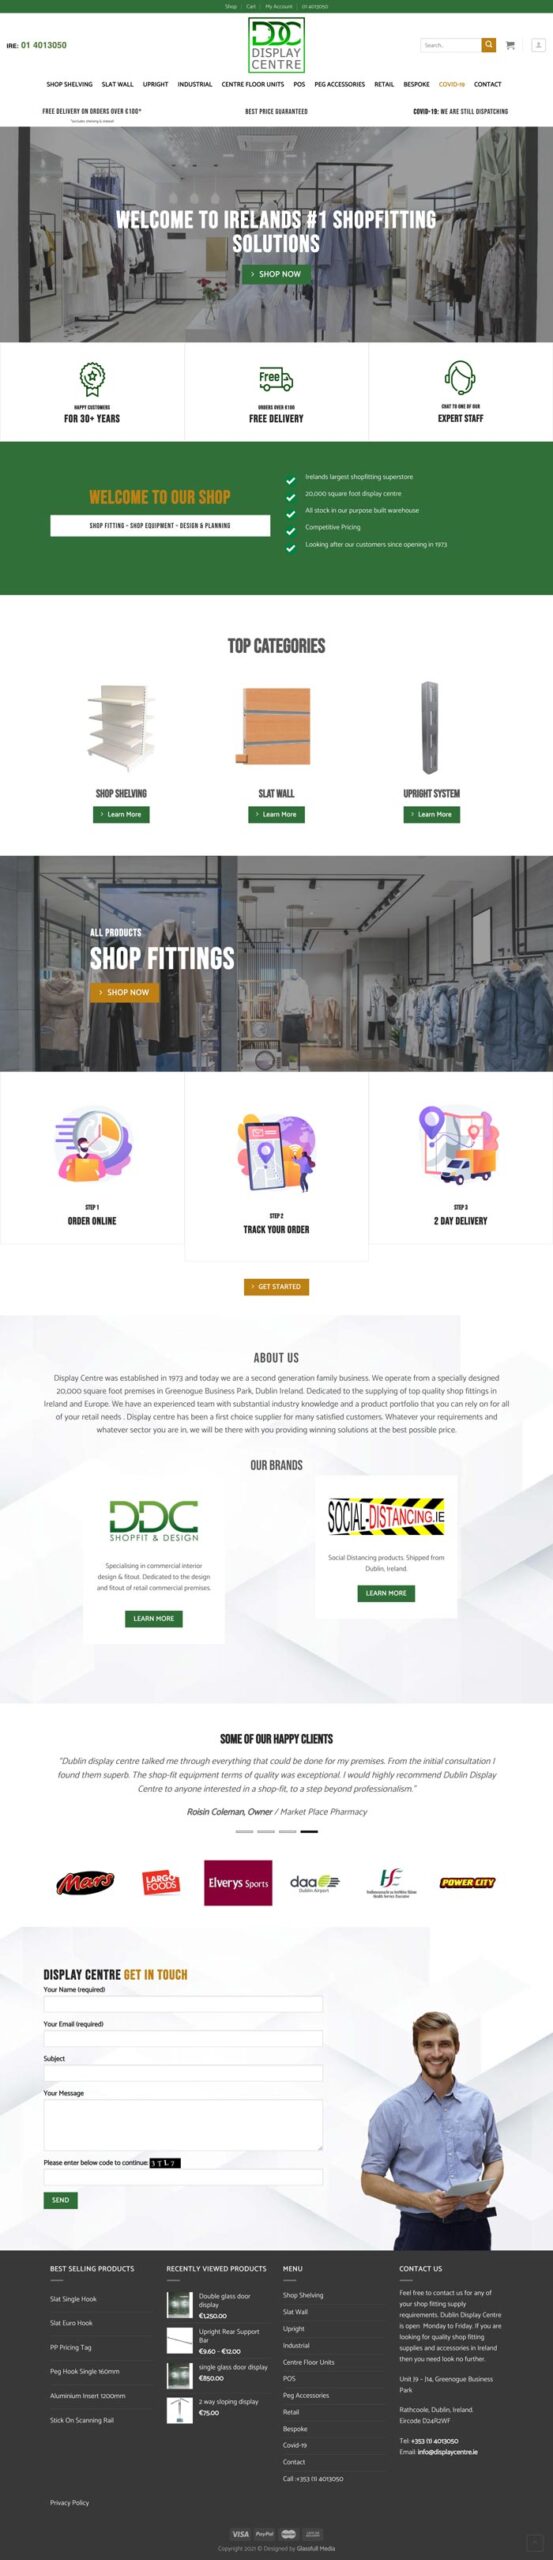 retail fitout ecommerce website design